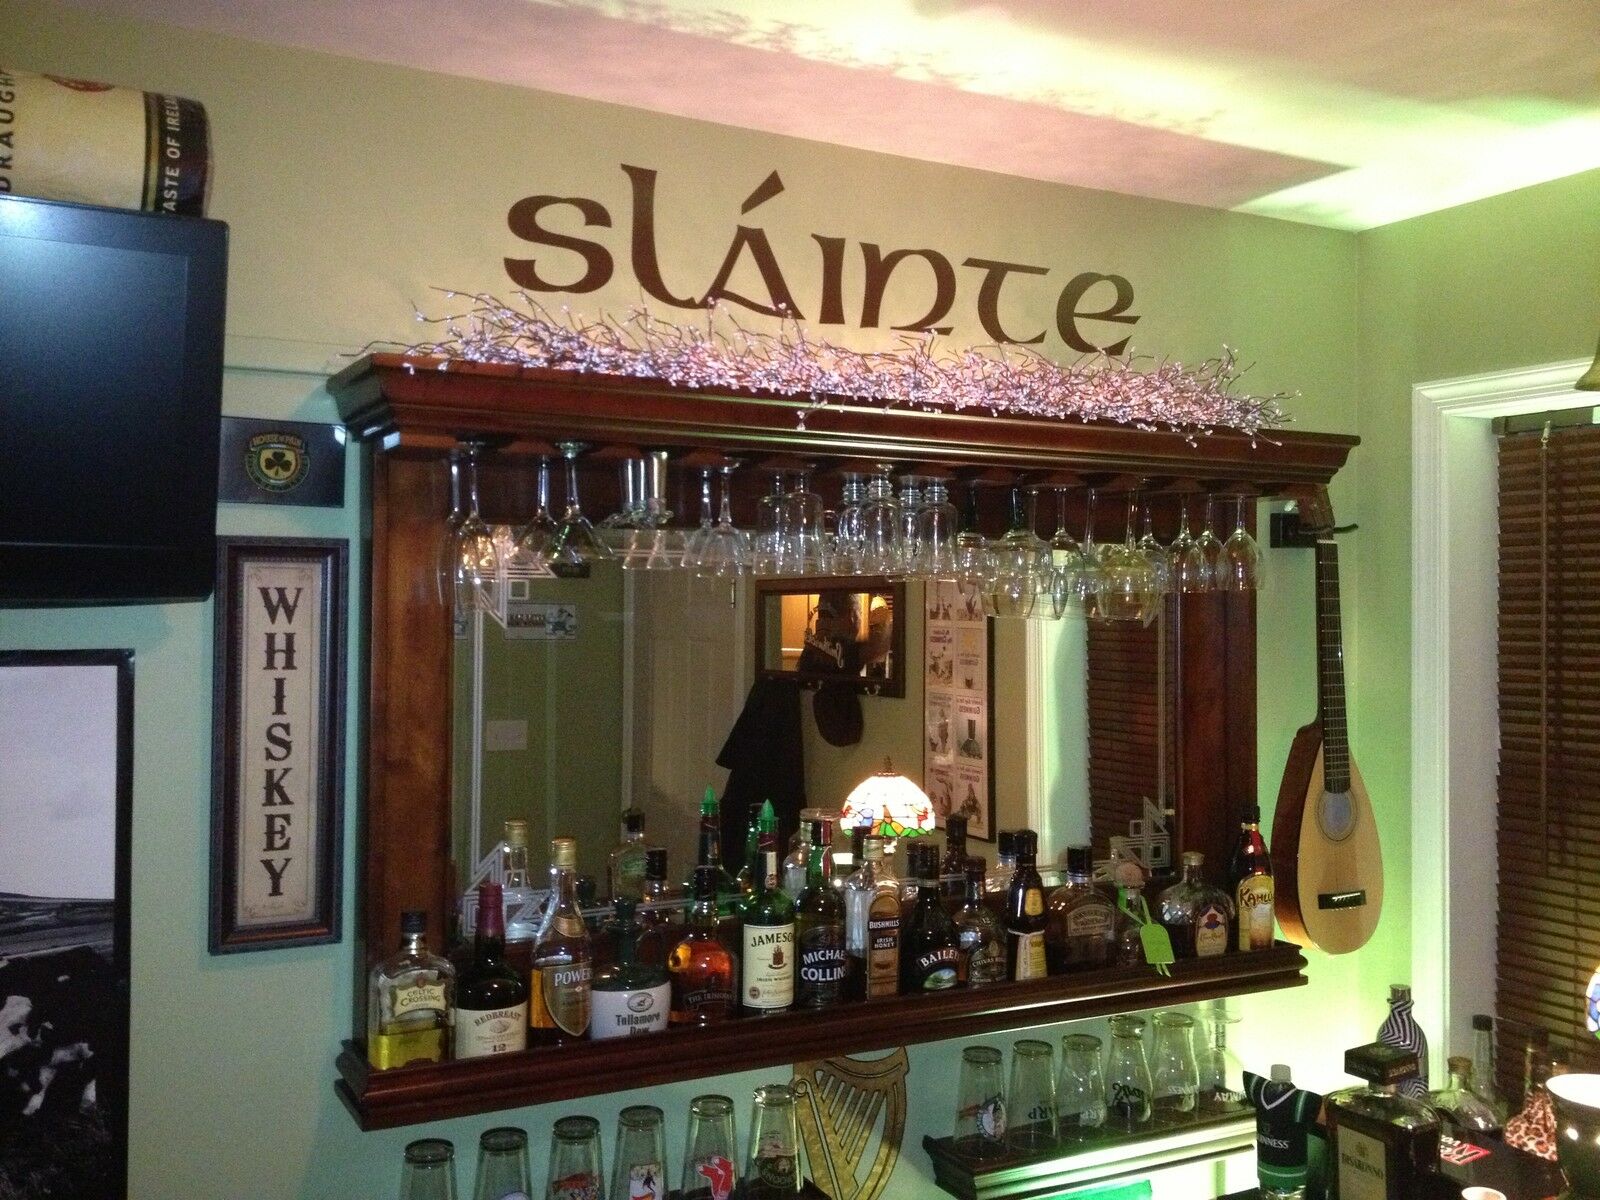 Slainte - Custom Bar Decor - Irish Celtic Cheers Decal